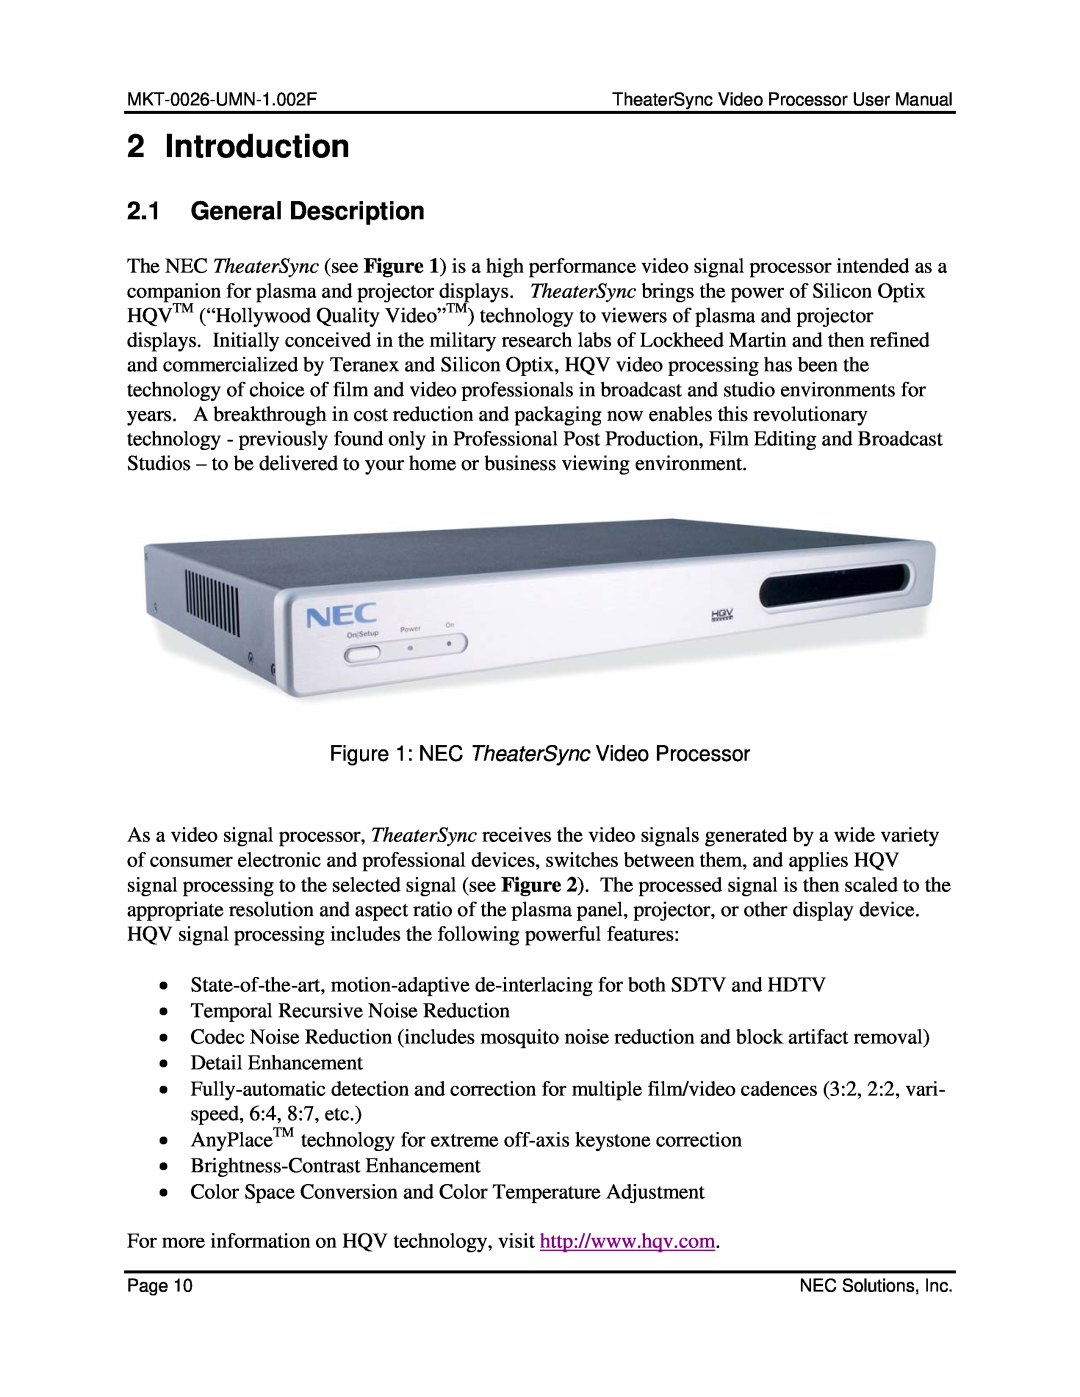 NEC TheaterSync Video Processor user manual Introduction, 2.1General Description 